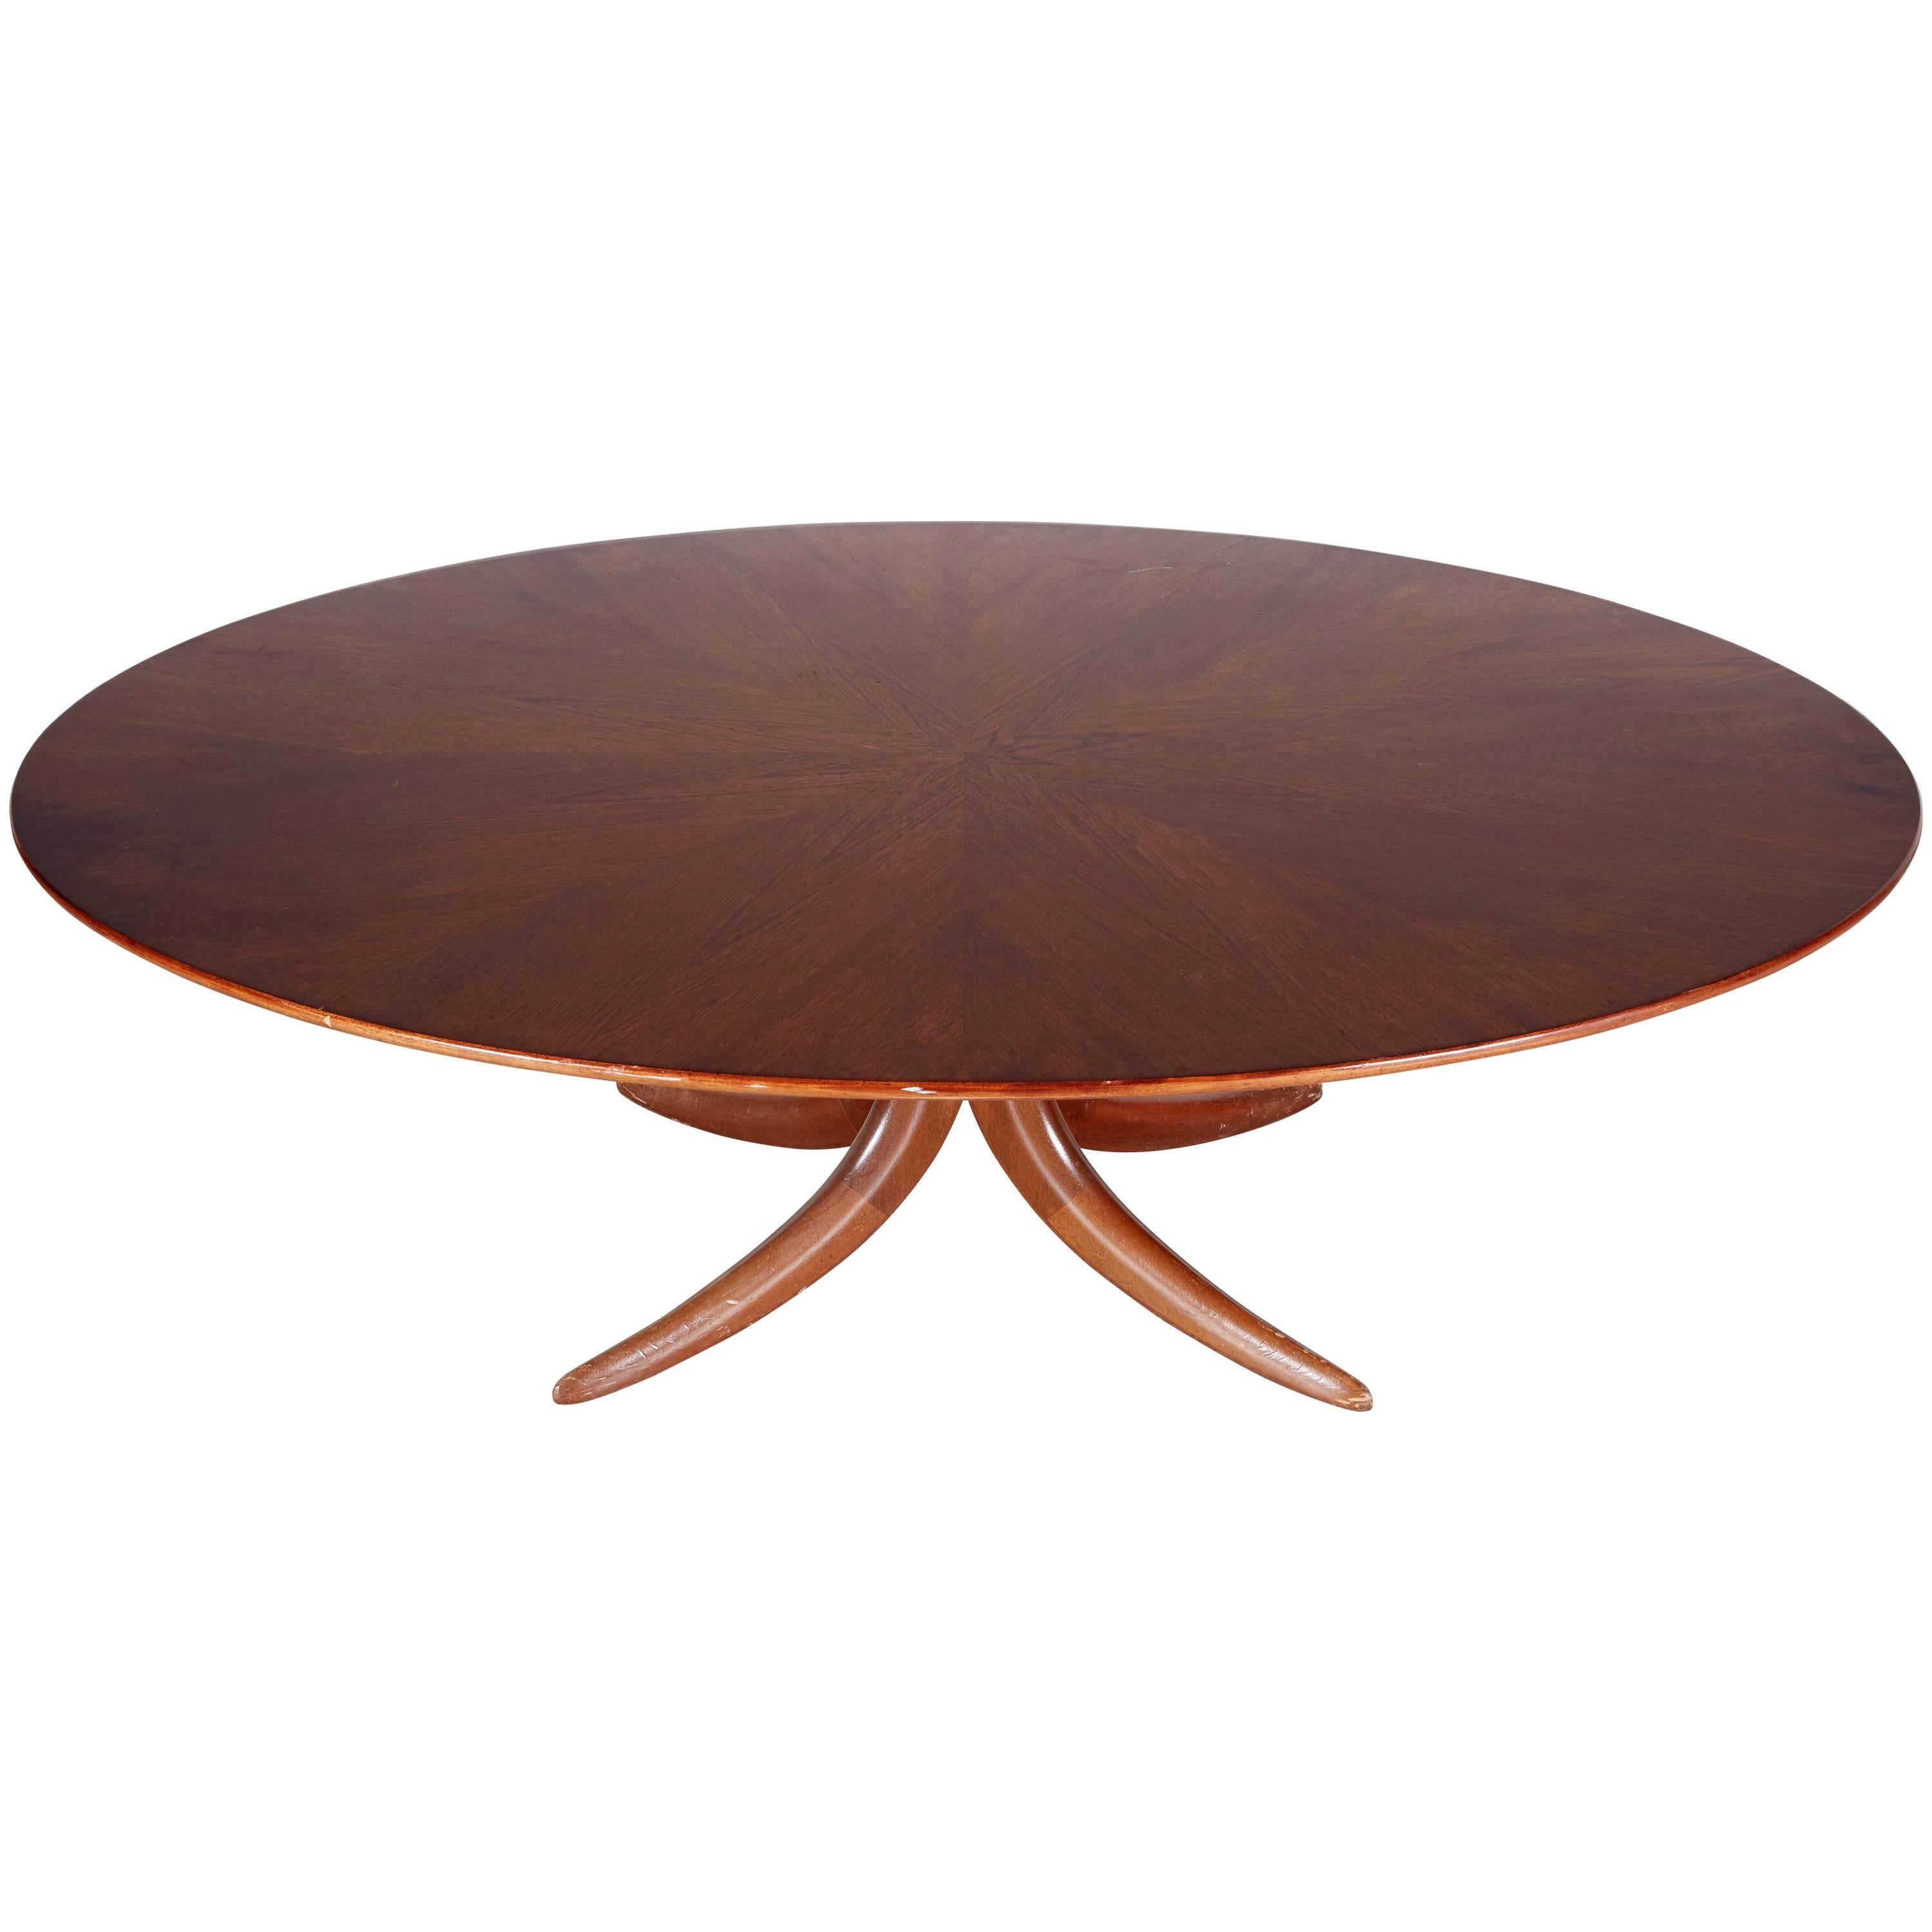 Postmodern Oval Mahogany Coffee Table